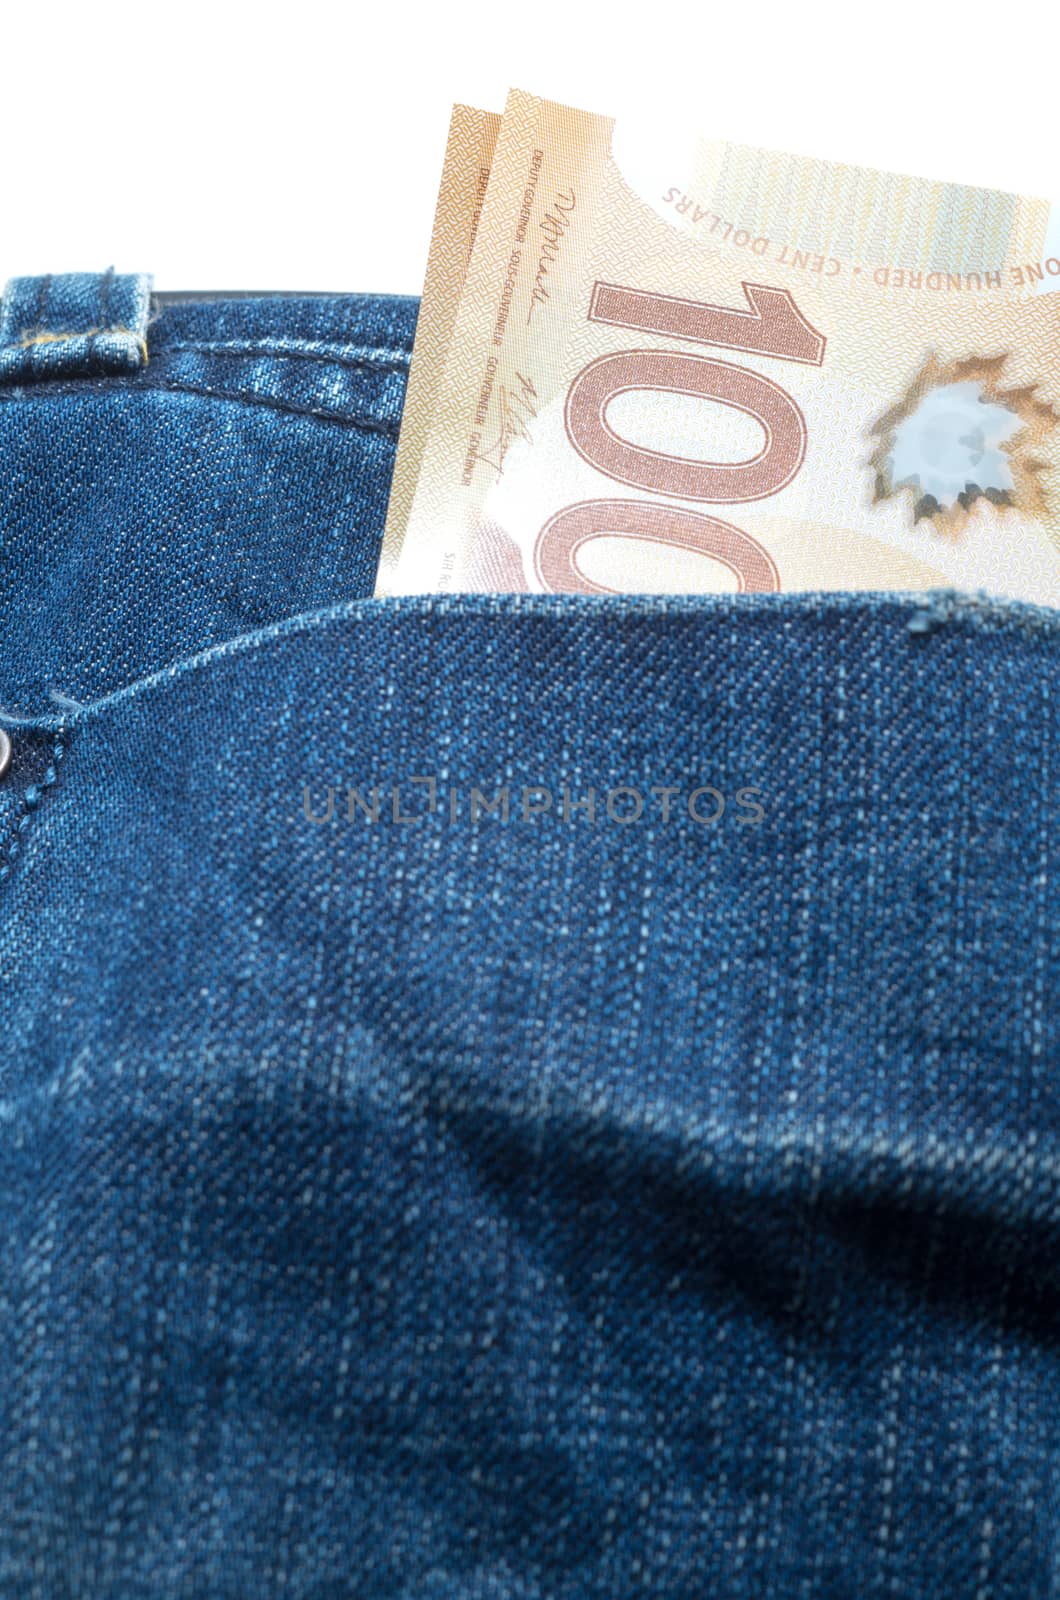 Hundred Canadian dollars bills in the back jean pocket 